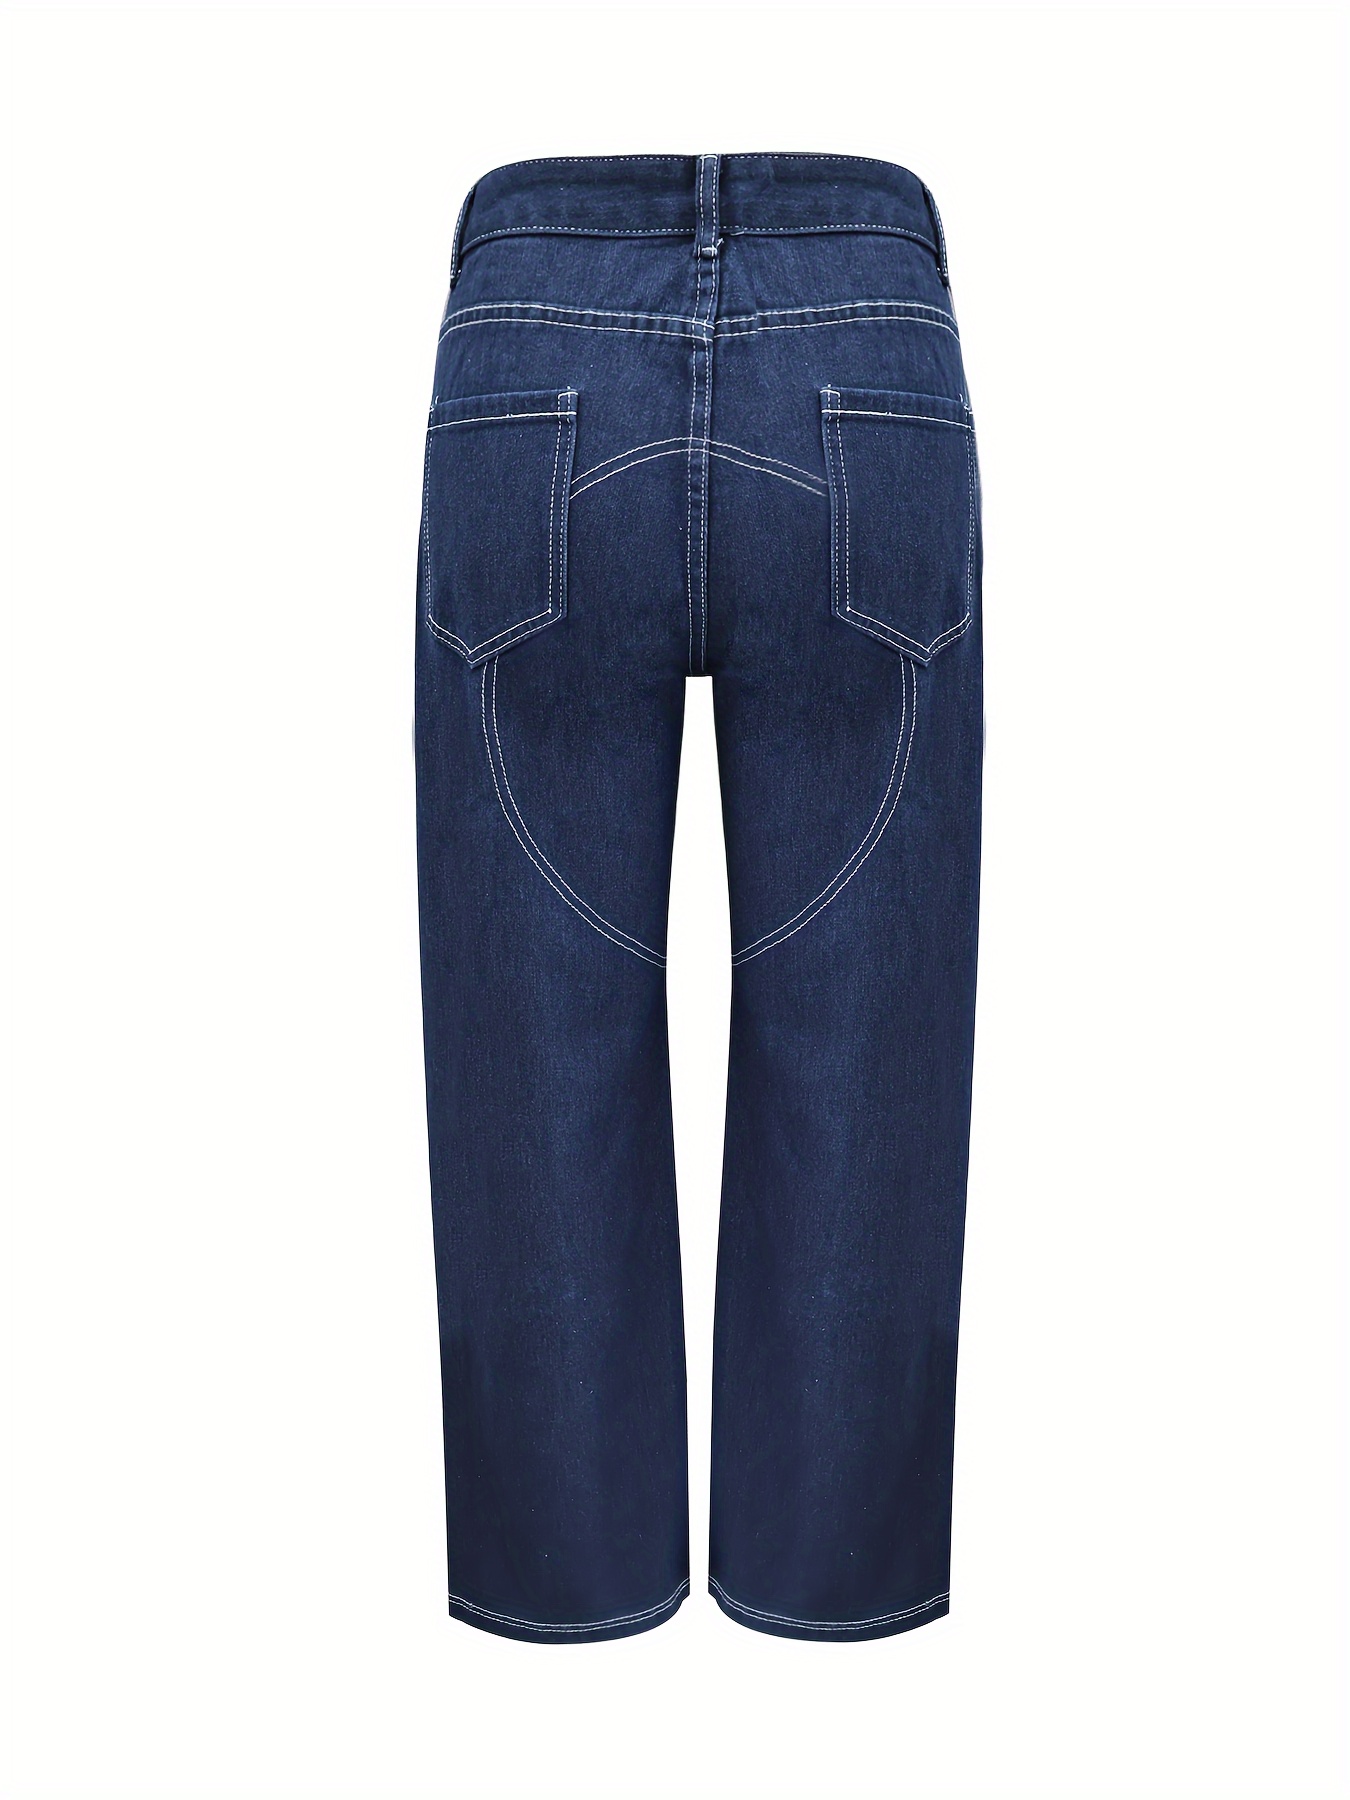 Patchwork Jeans Women Straight Pants High Waist Denim Baggy Jeans